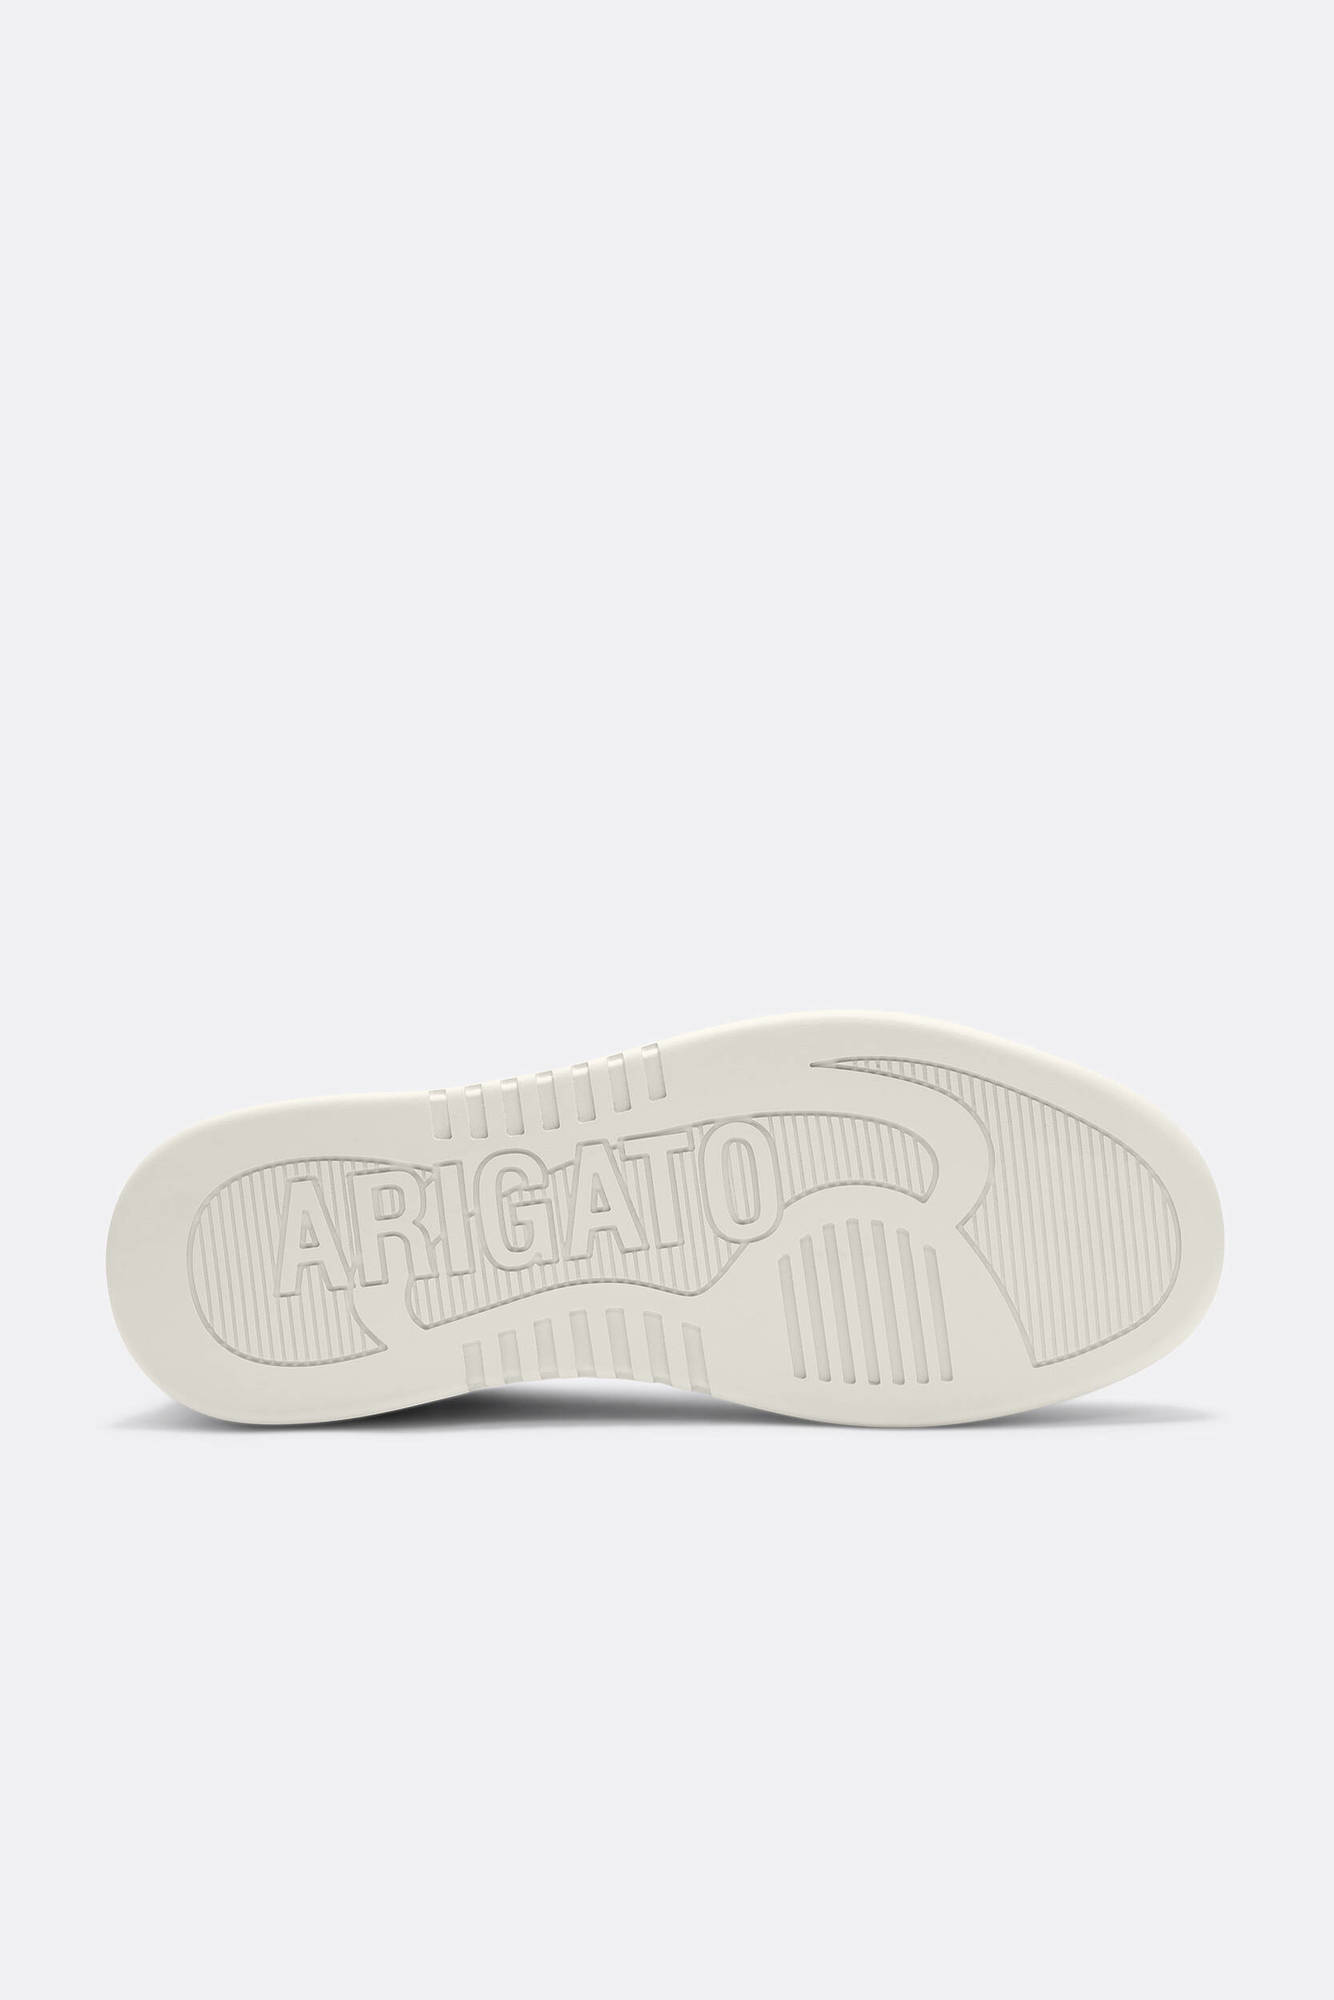 AXEL ARIGATO Dice Lo Sneaker in Beige/Light Grey 42